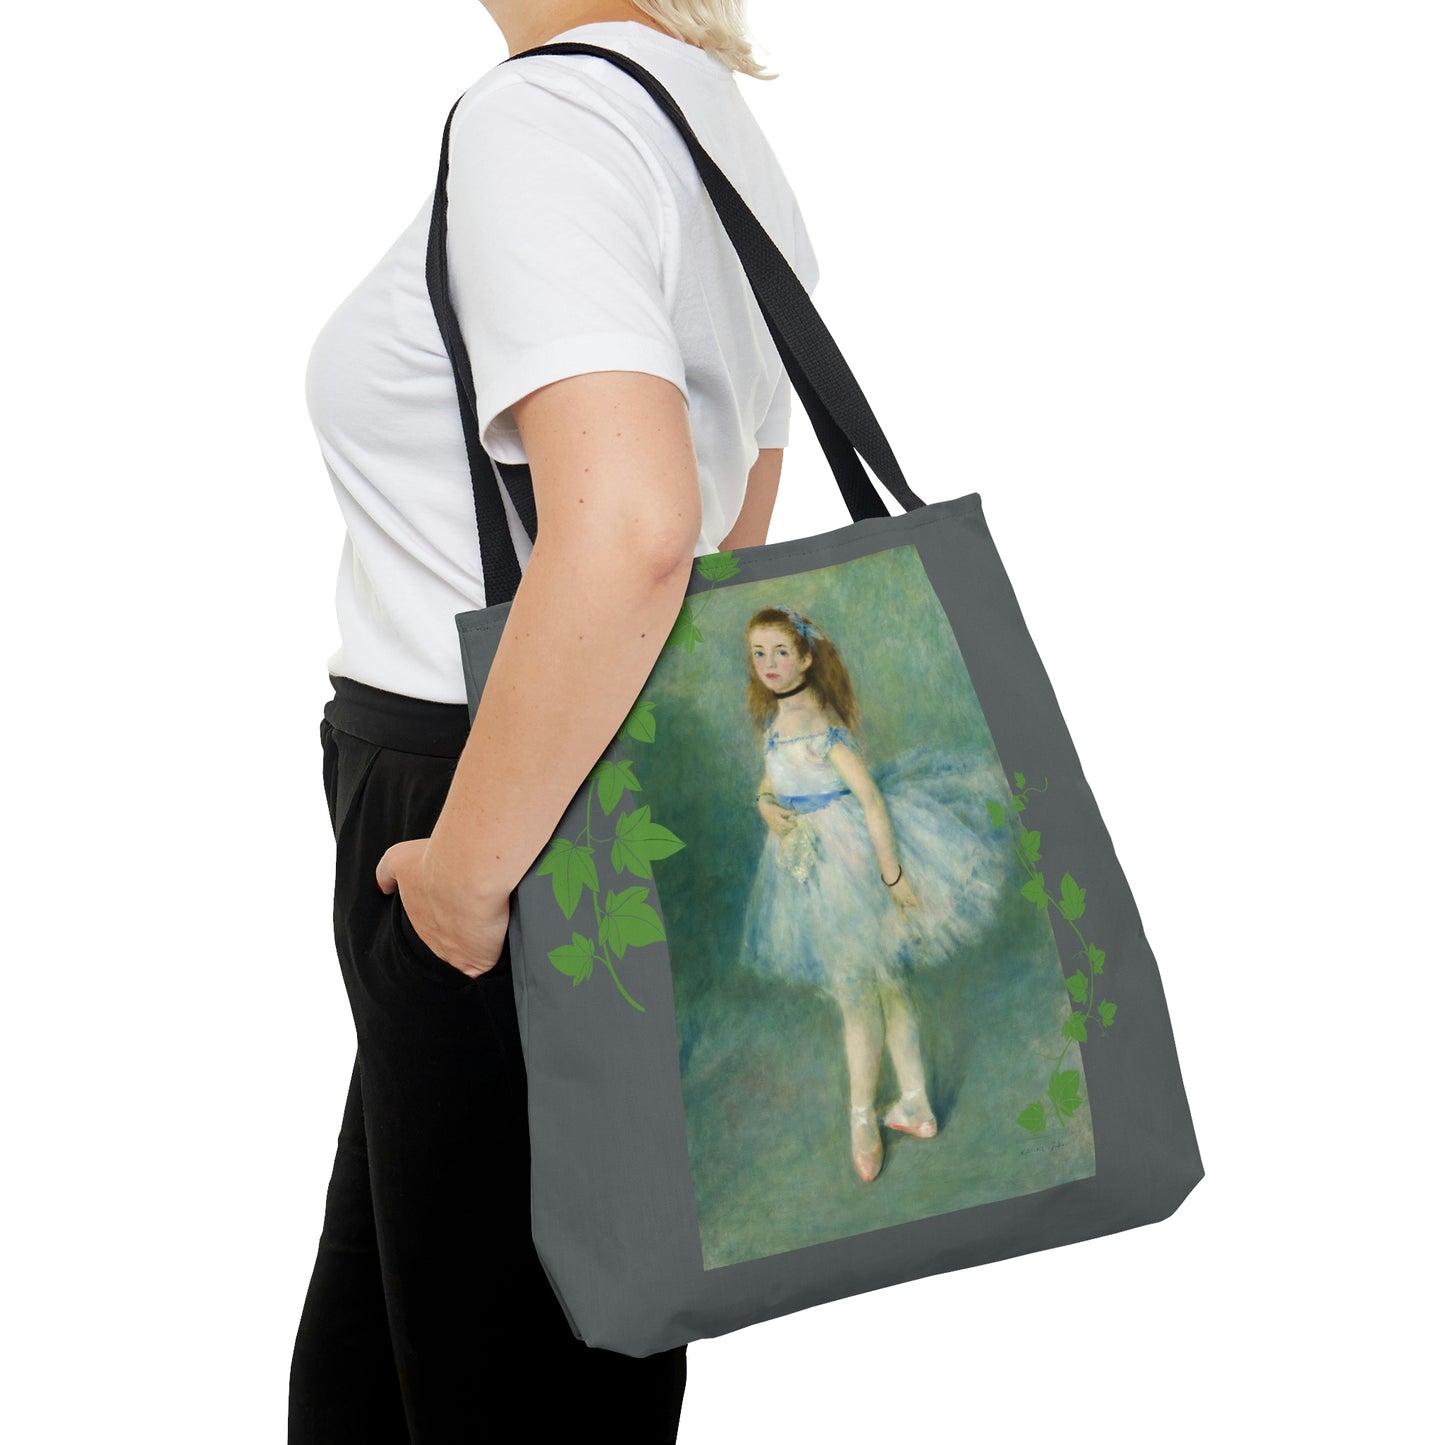 Impressionist Tote Bag